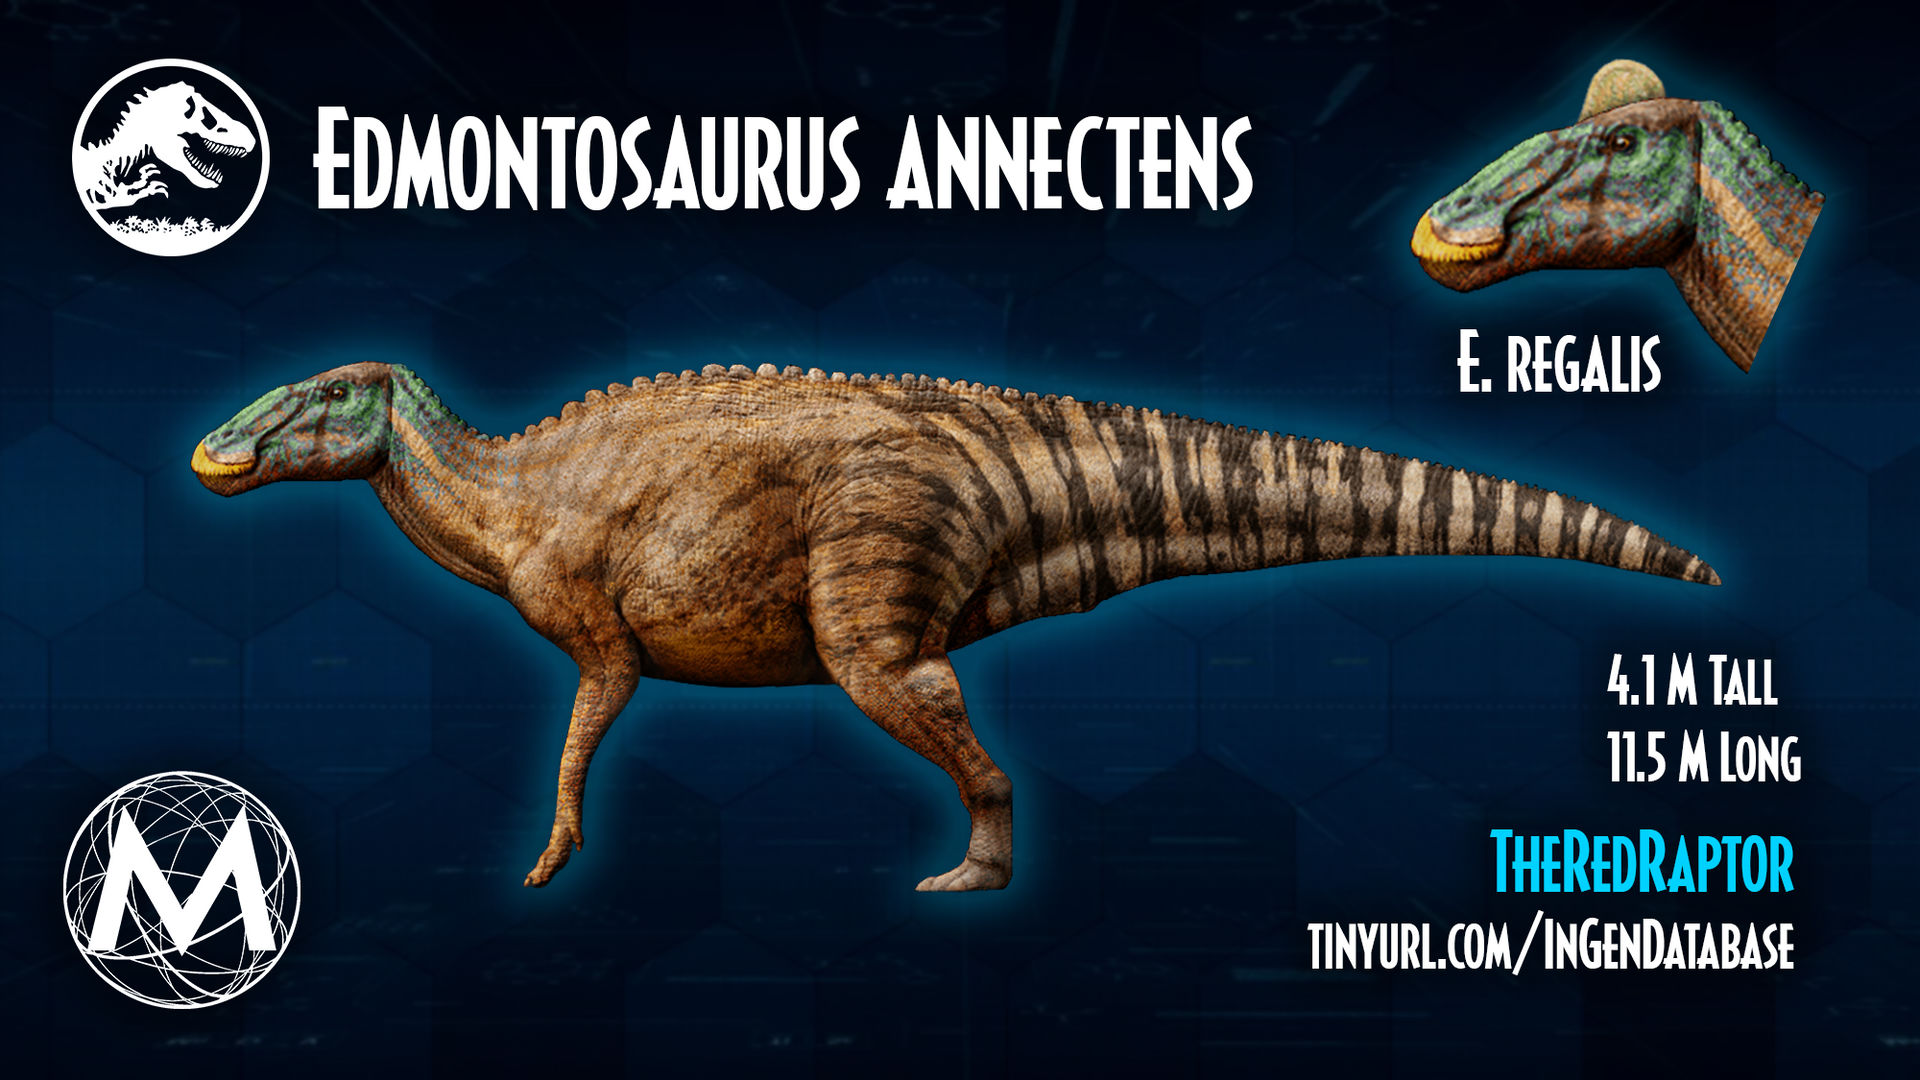 edmontosaurus___species_profile_by_theredraptor65_deiws3f-fullview.jpg